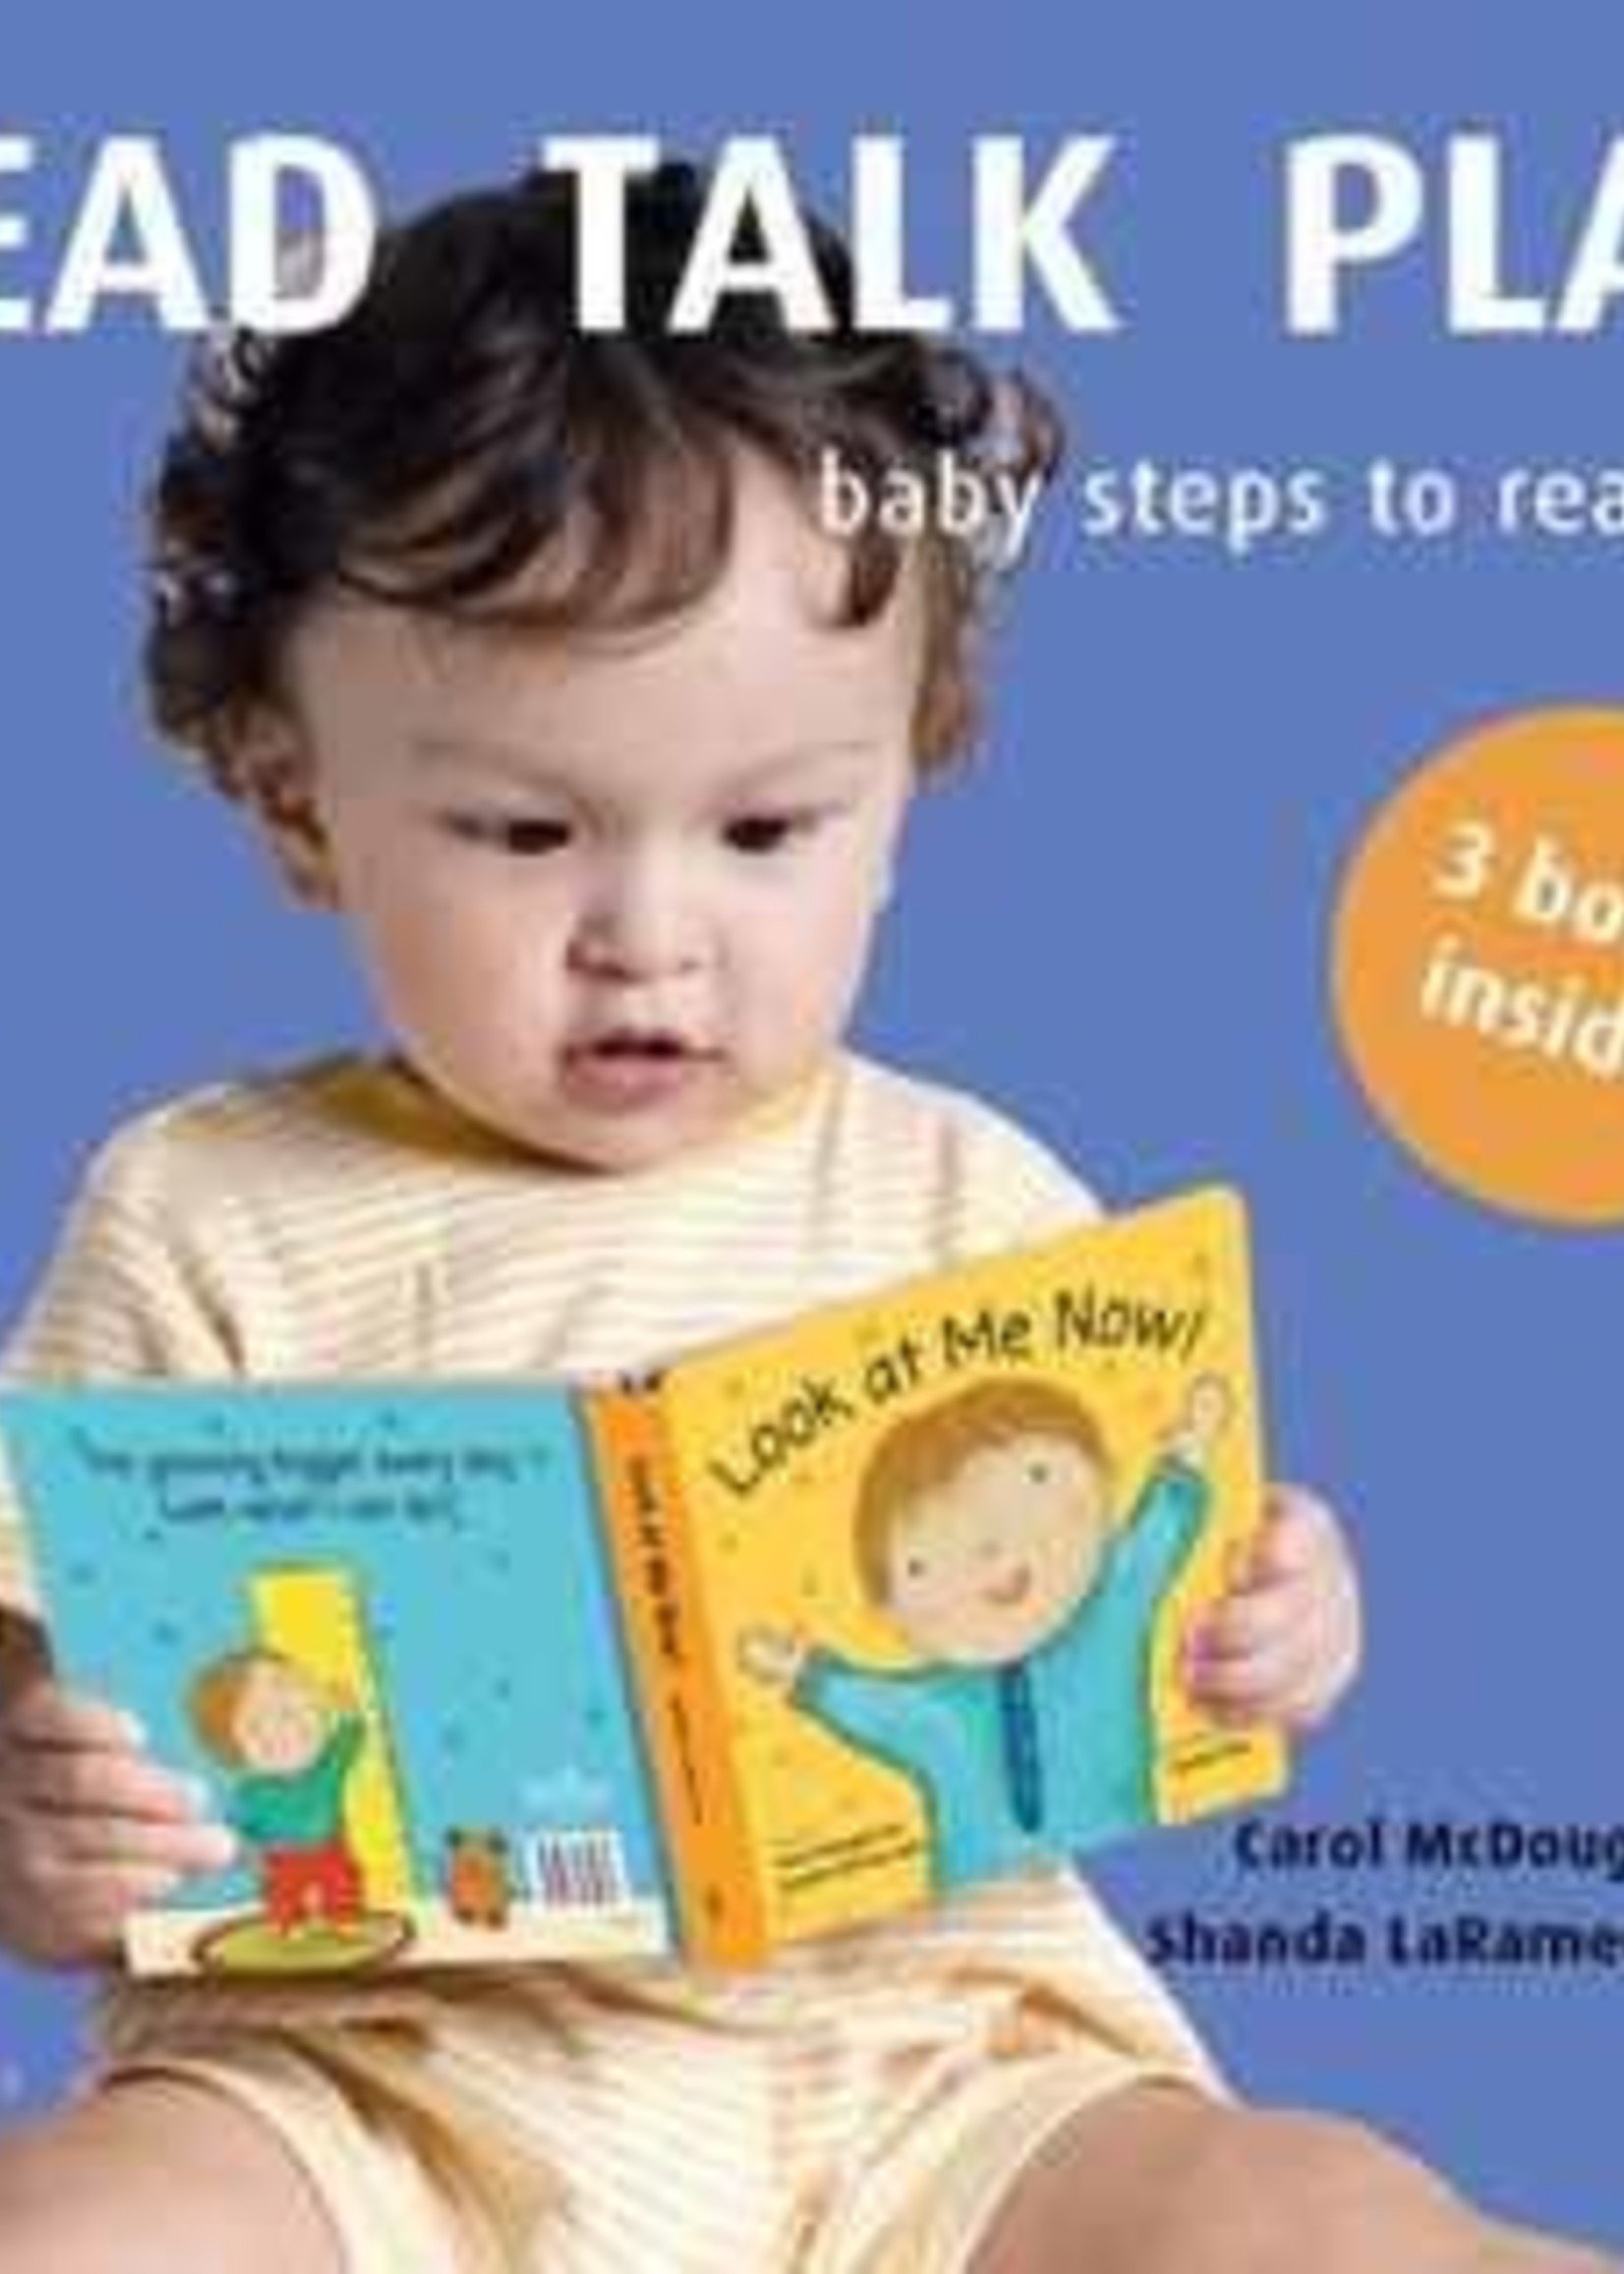 Read Talk Play: Baby Steps to Reading by Carol McDougall, Shanda LaRamee-Jones